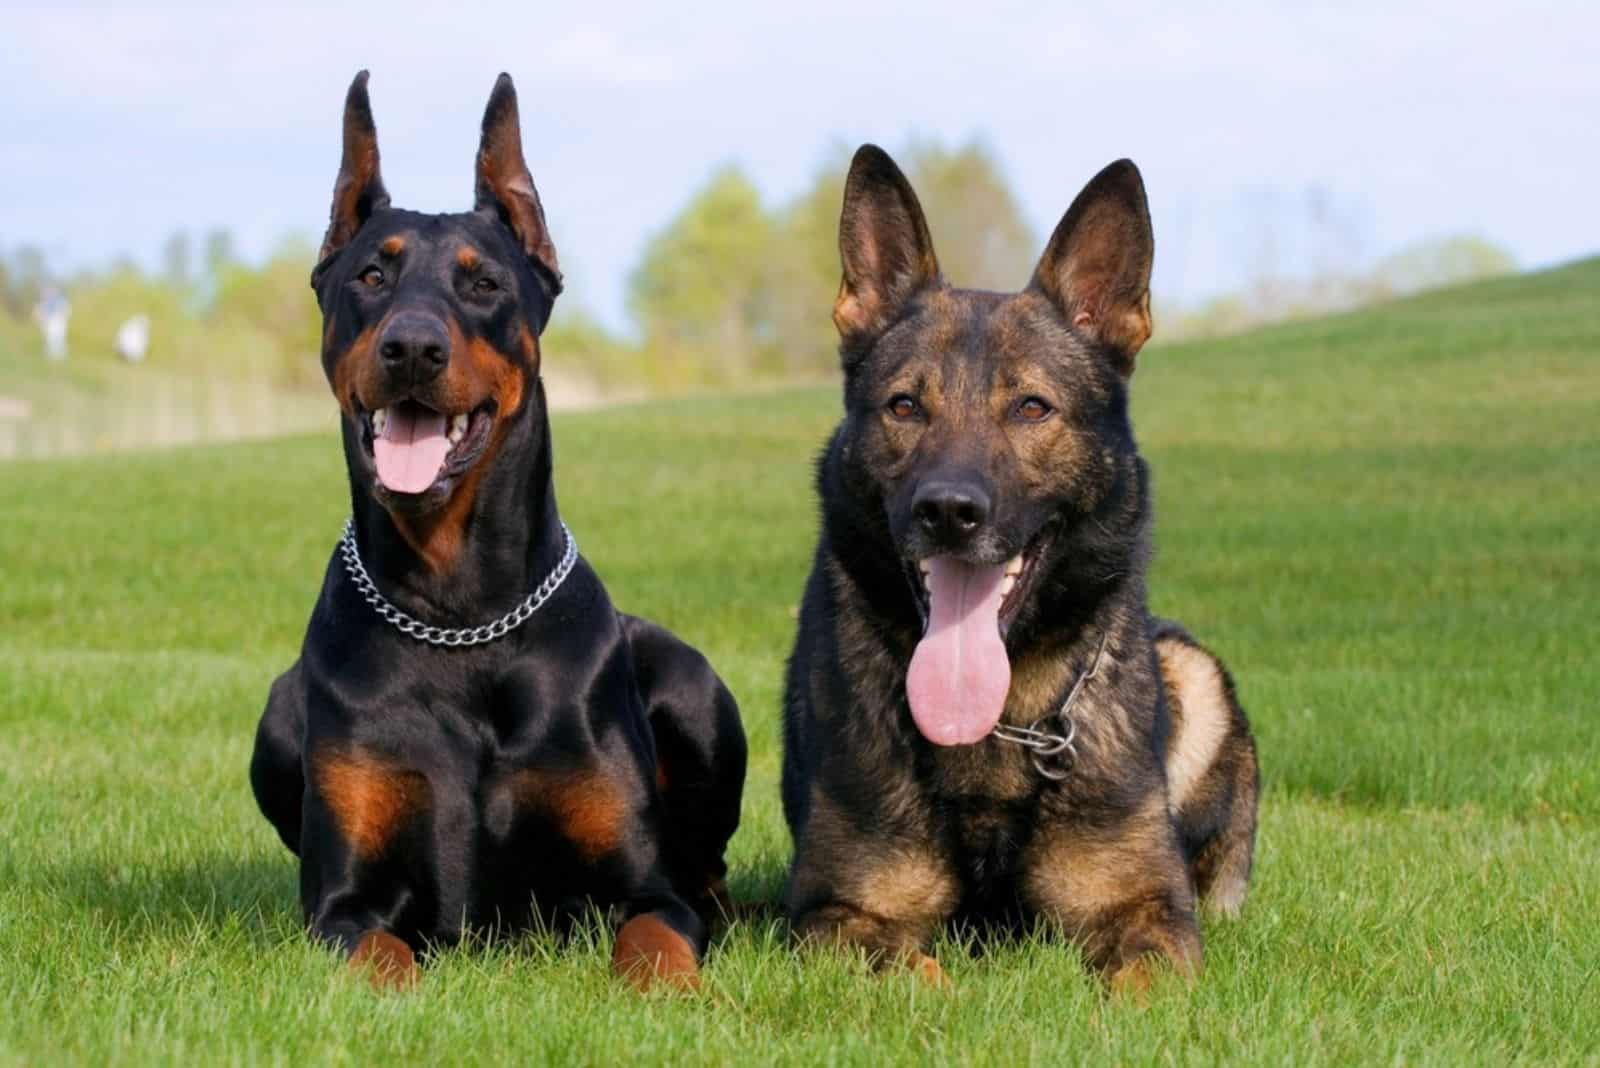 Doberman vs. German Shepherd: Which One Is The Best Pet?